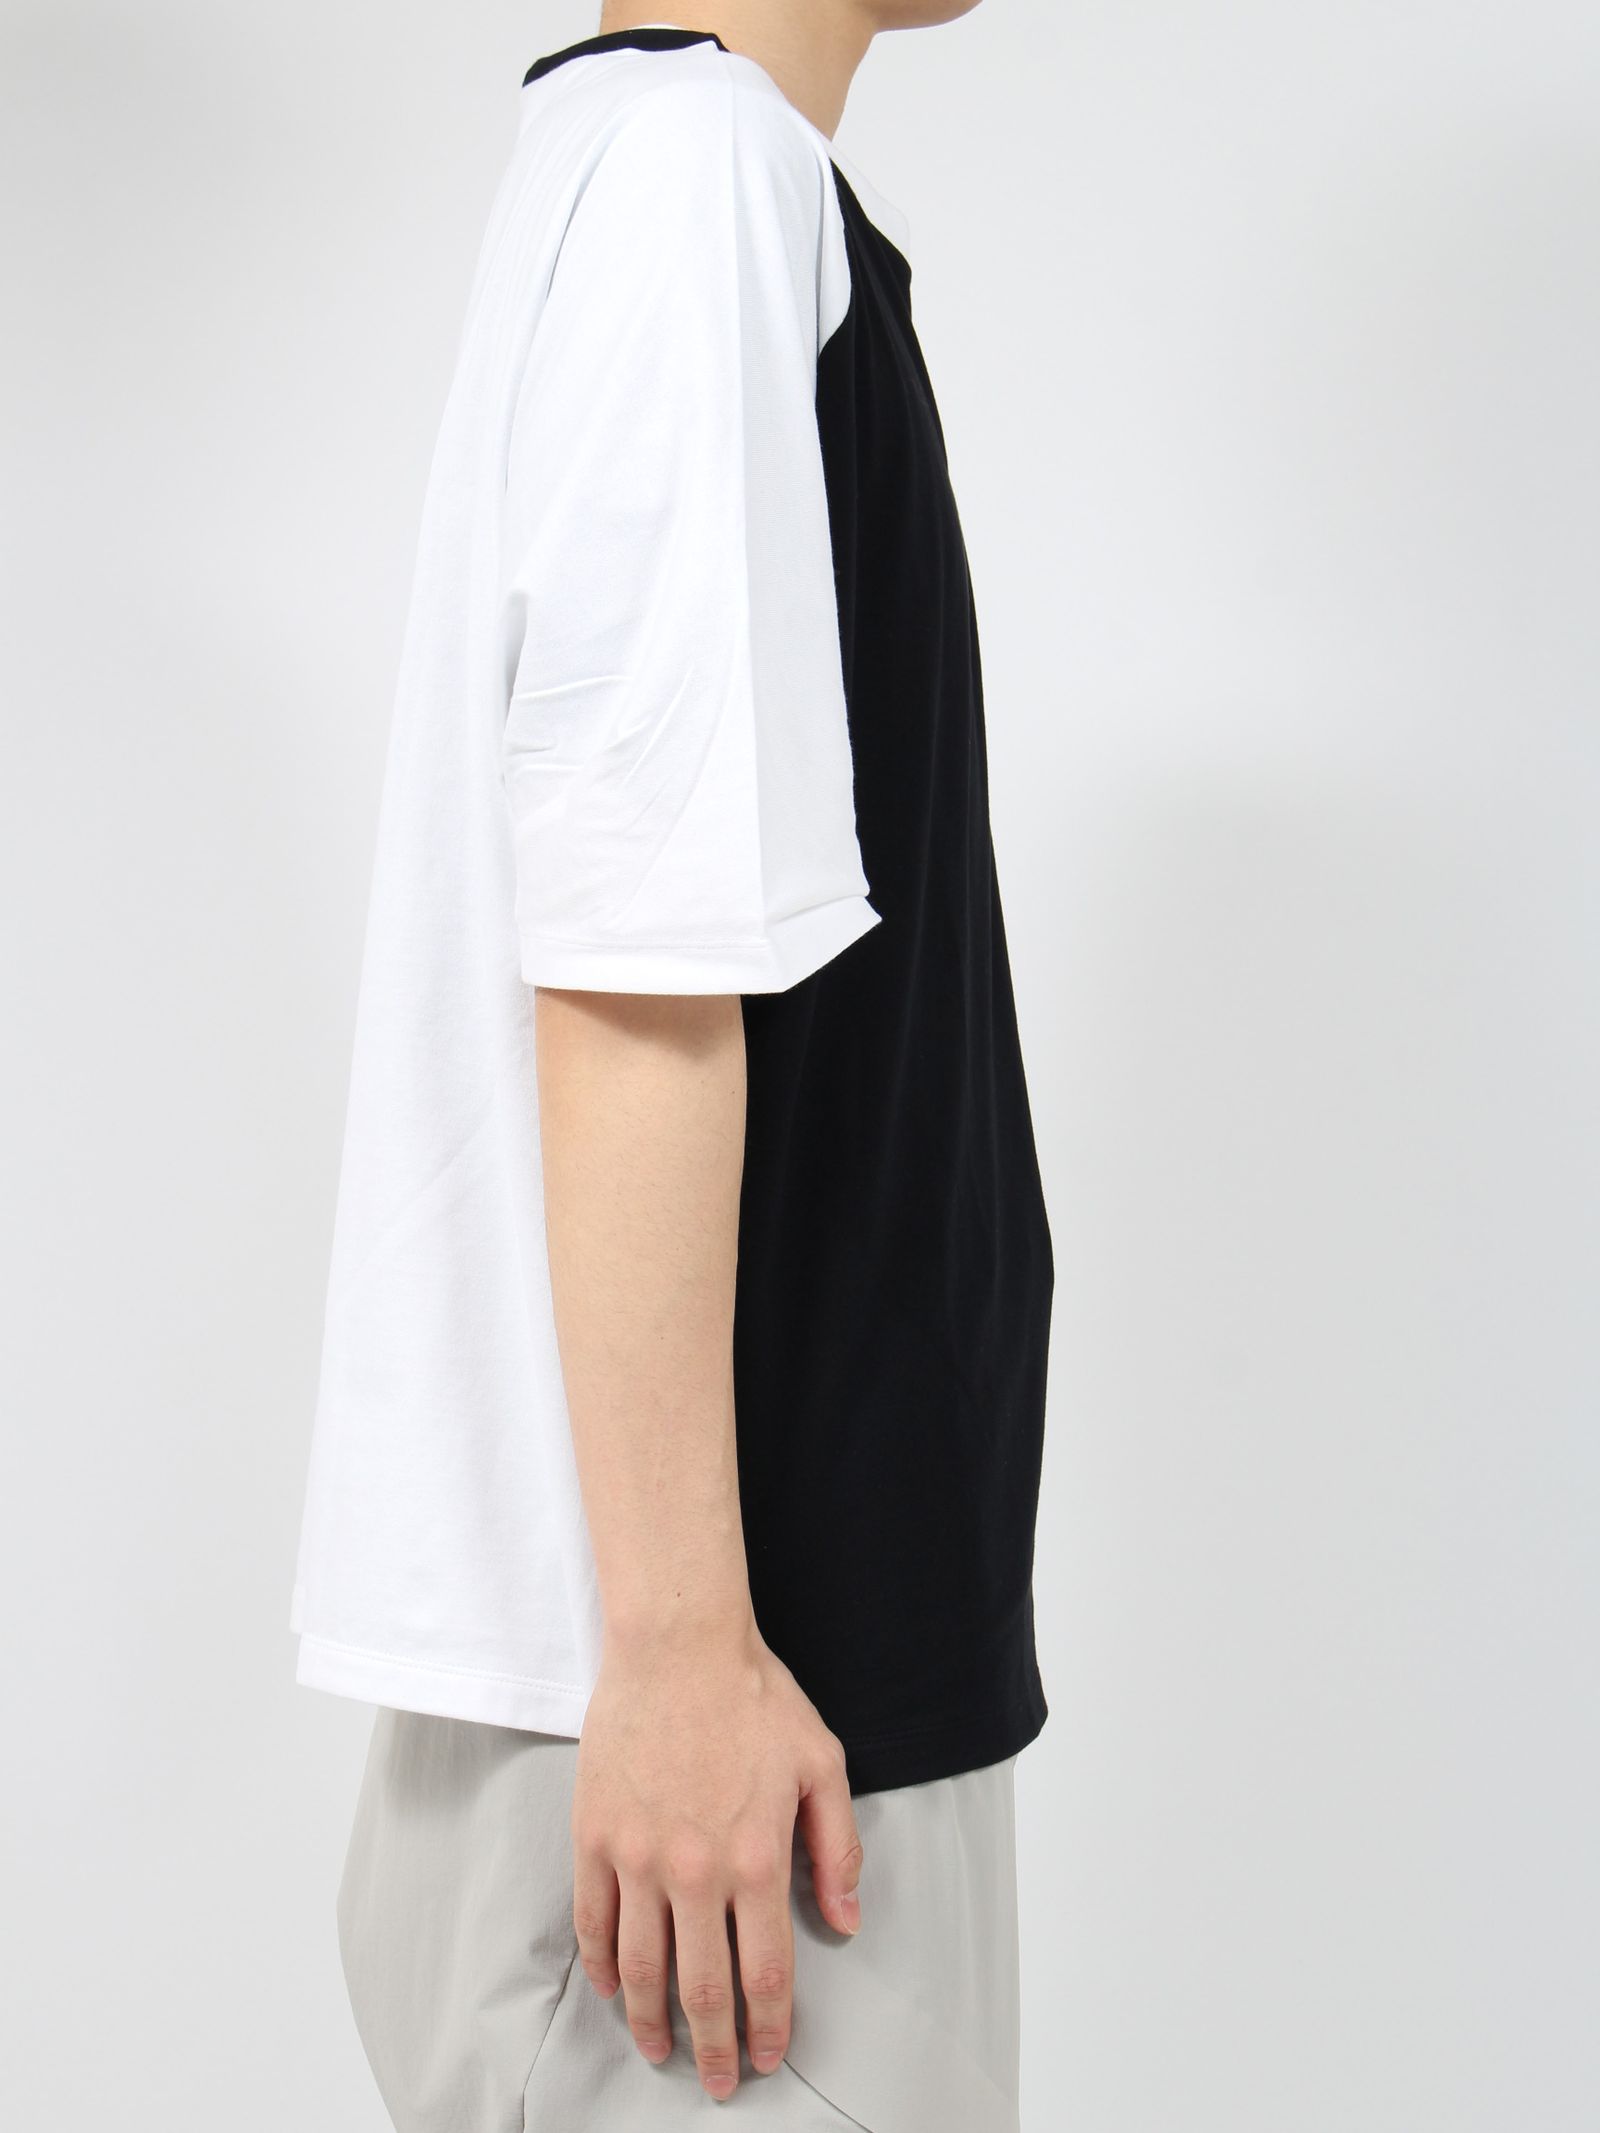 FUMITO GANRYU - 【24SS】キネティック Tシャツ / KINETIC T-SHIRT 